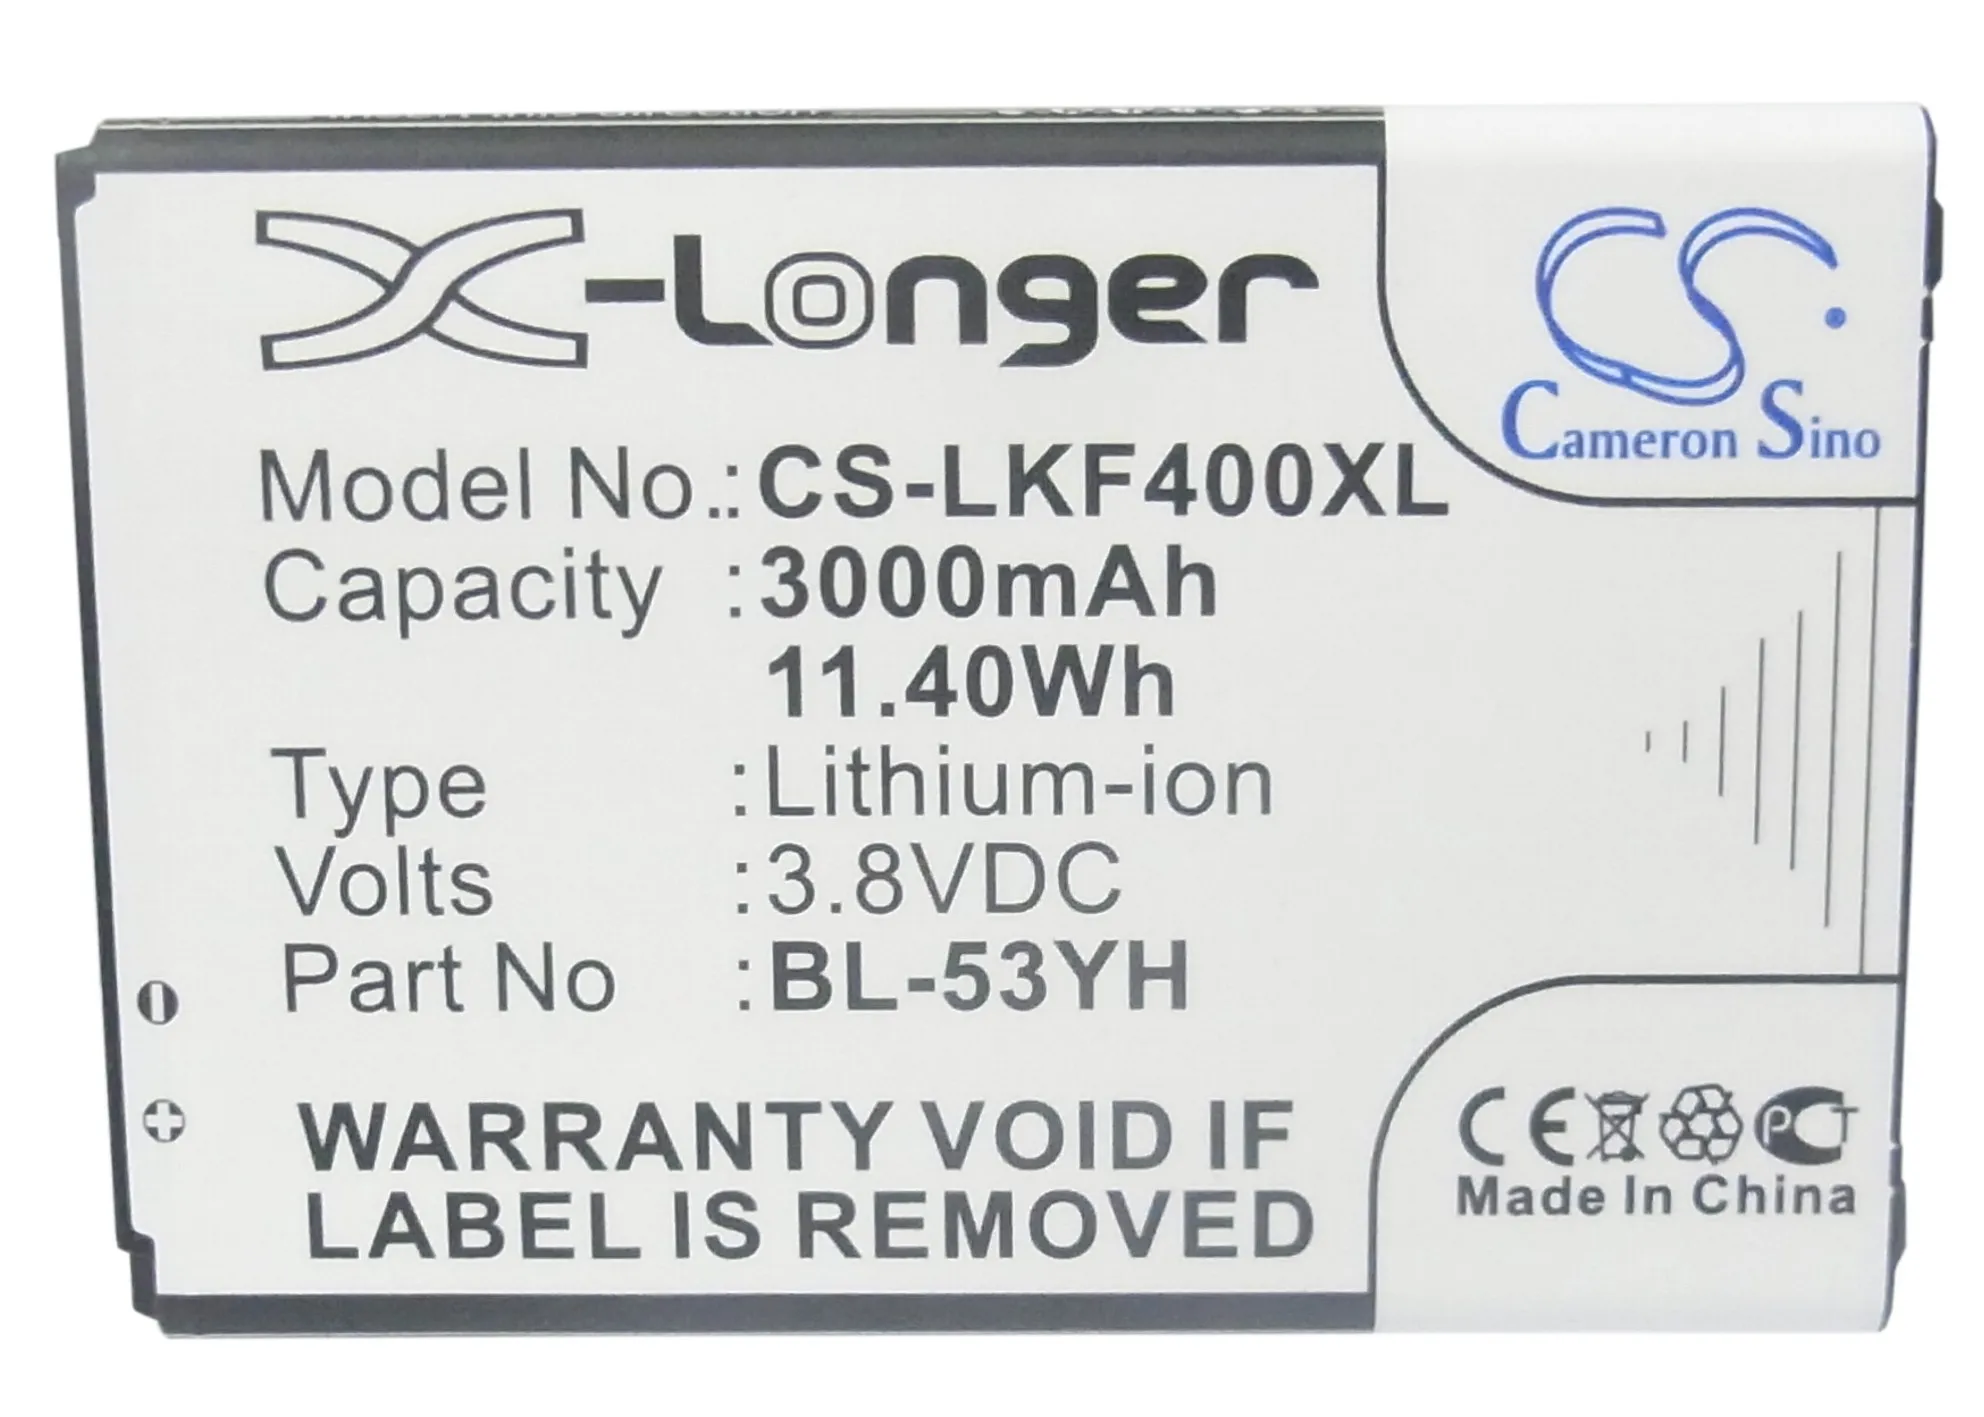 

Cameron Sino 3000mAh Battery BL-53YH for LG D690,D690N,D693,D693N,D830,D850,D851,D855,D855K,F400, F490L,G3,LS990,US990,VS985